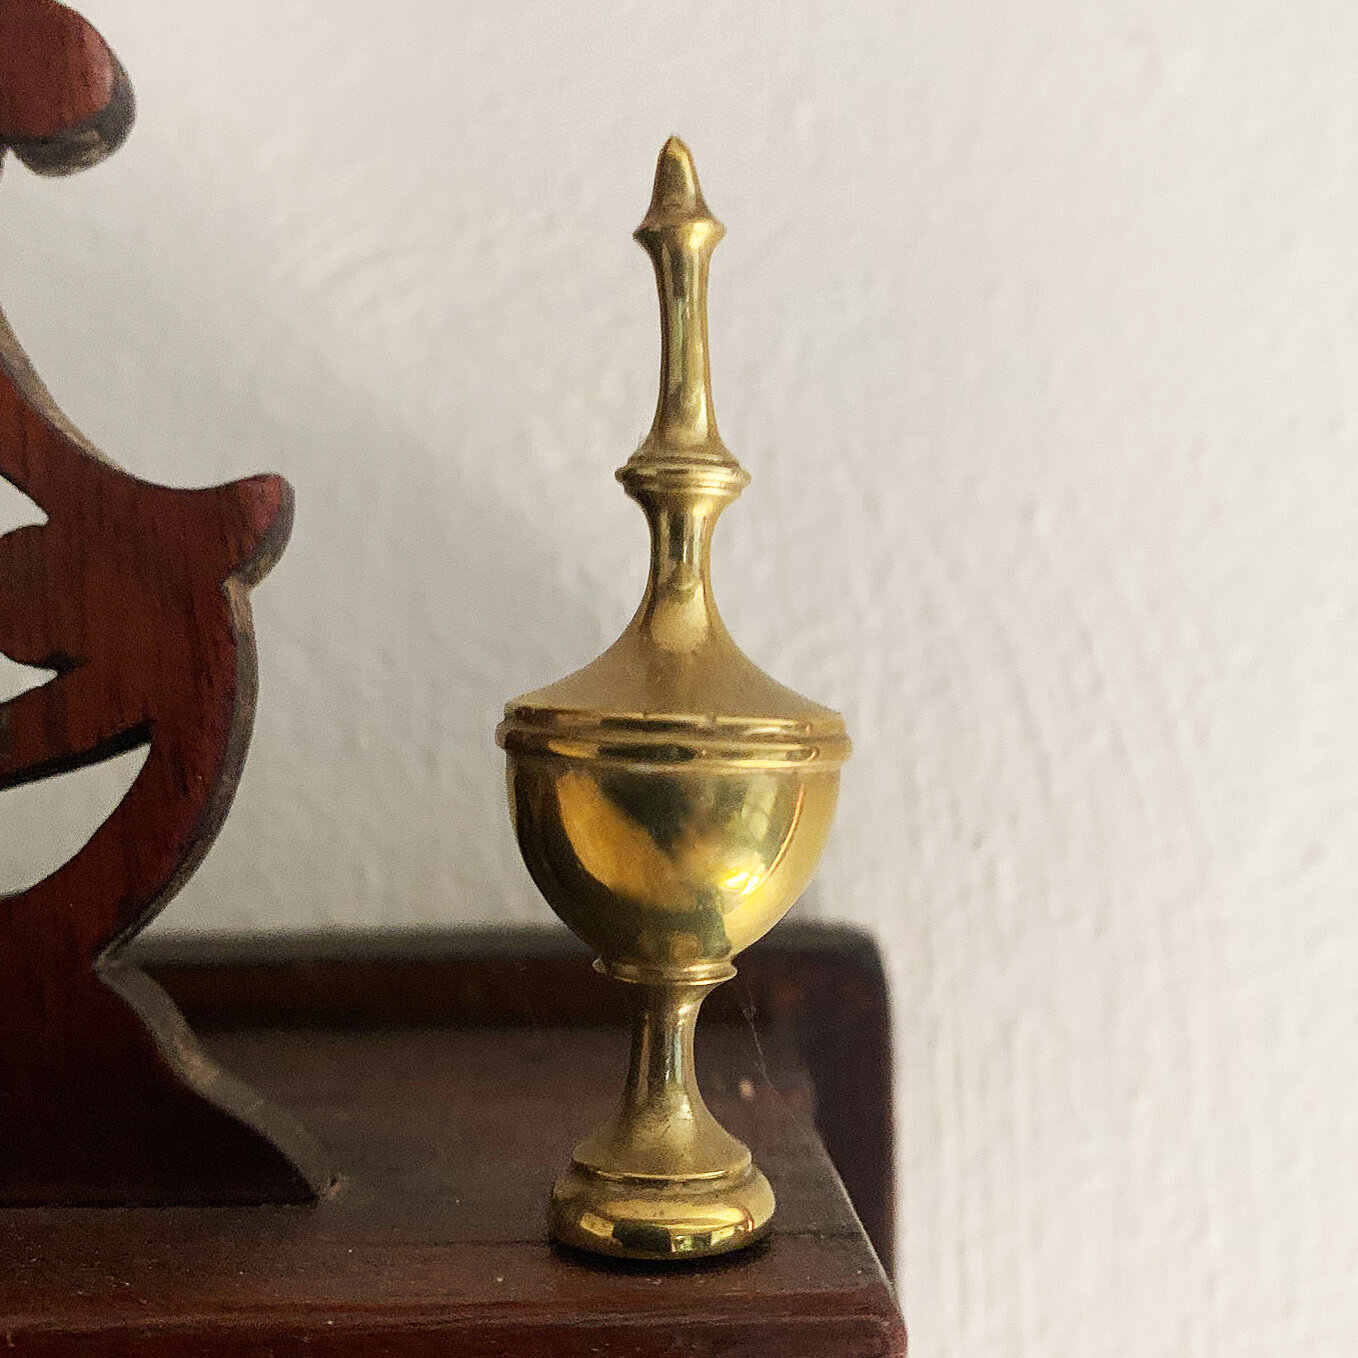 Details about   A pair superb quality antique brass furniture clock finial vase shape finial Z5 